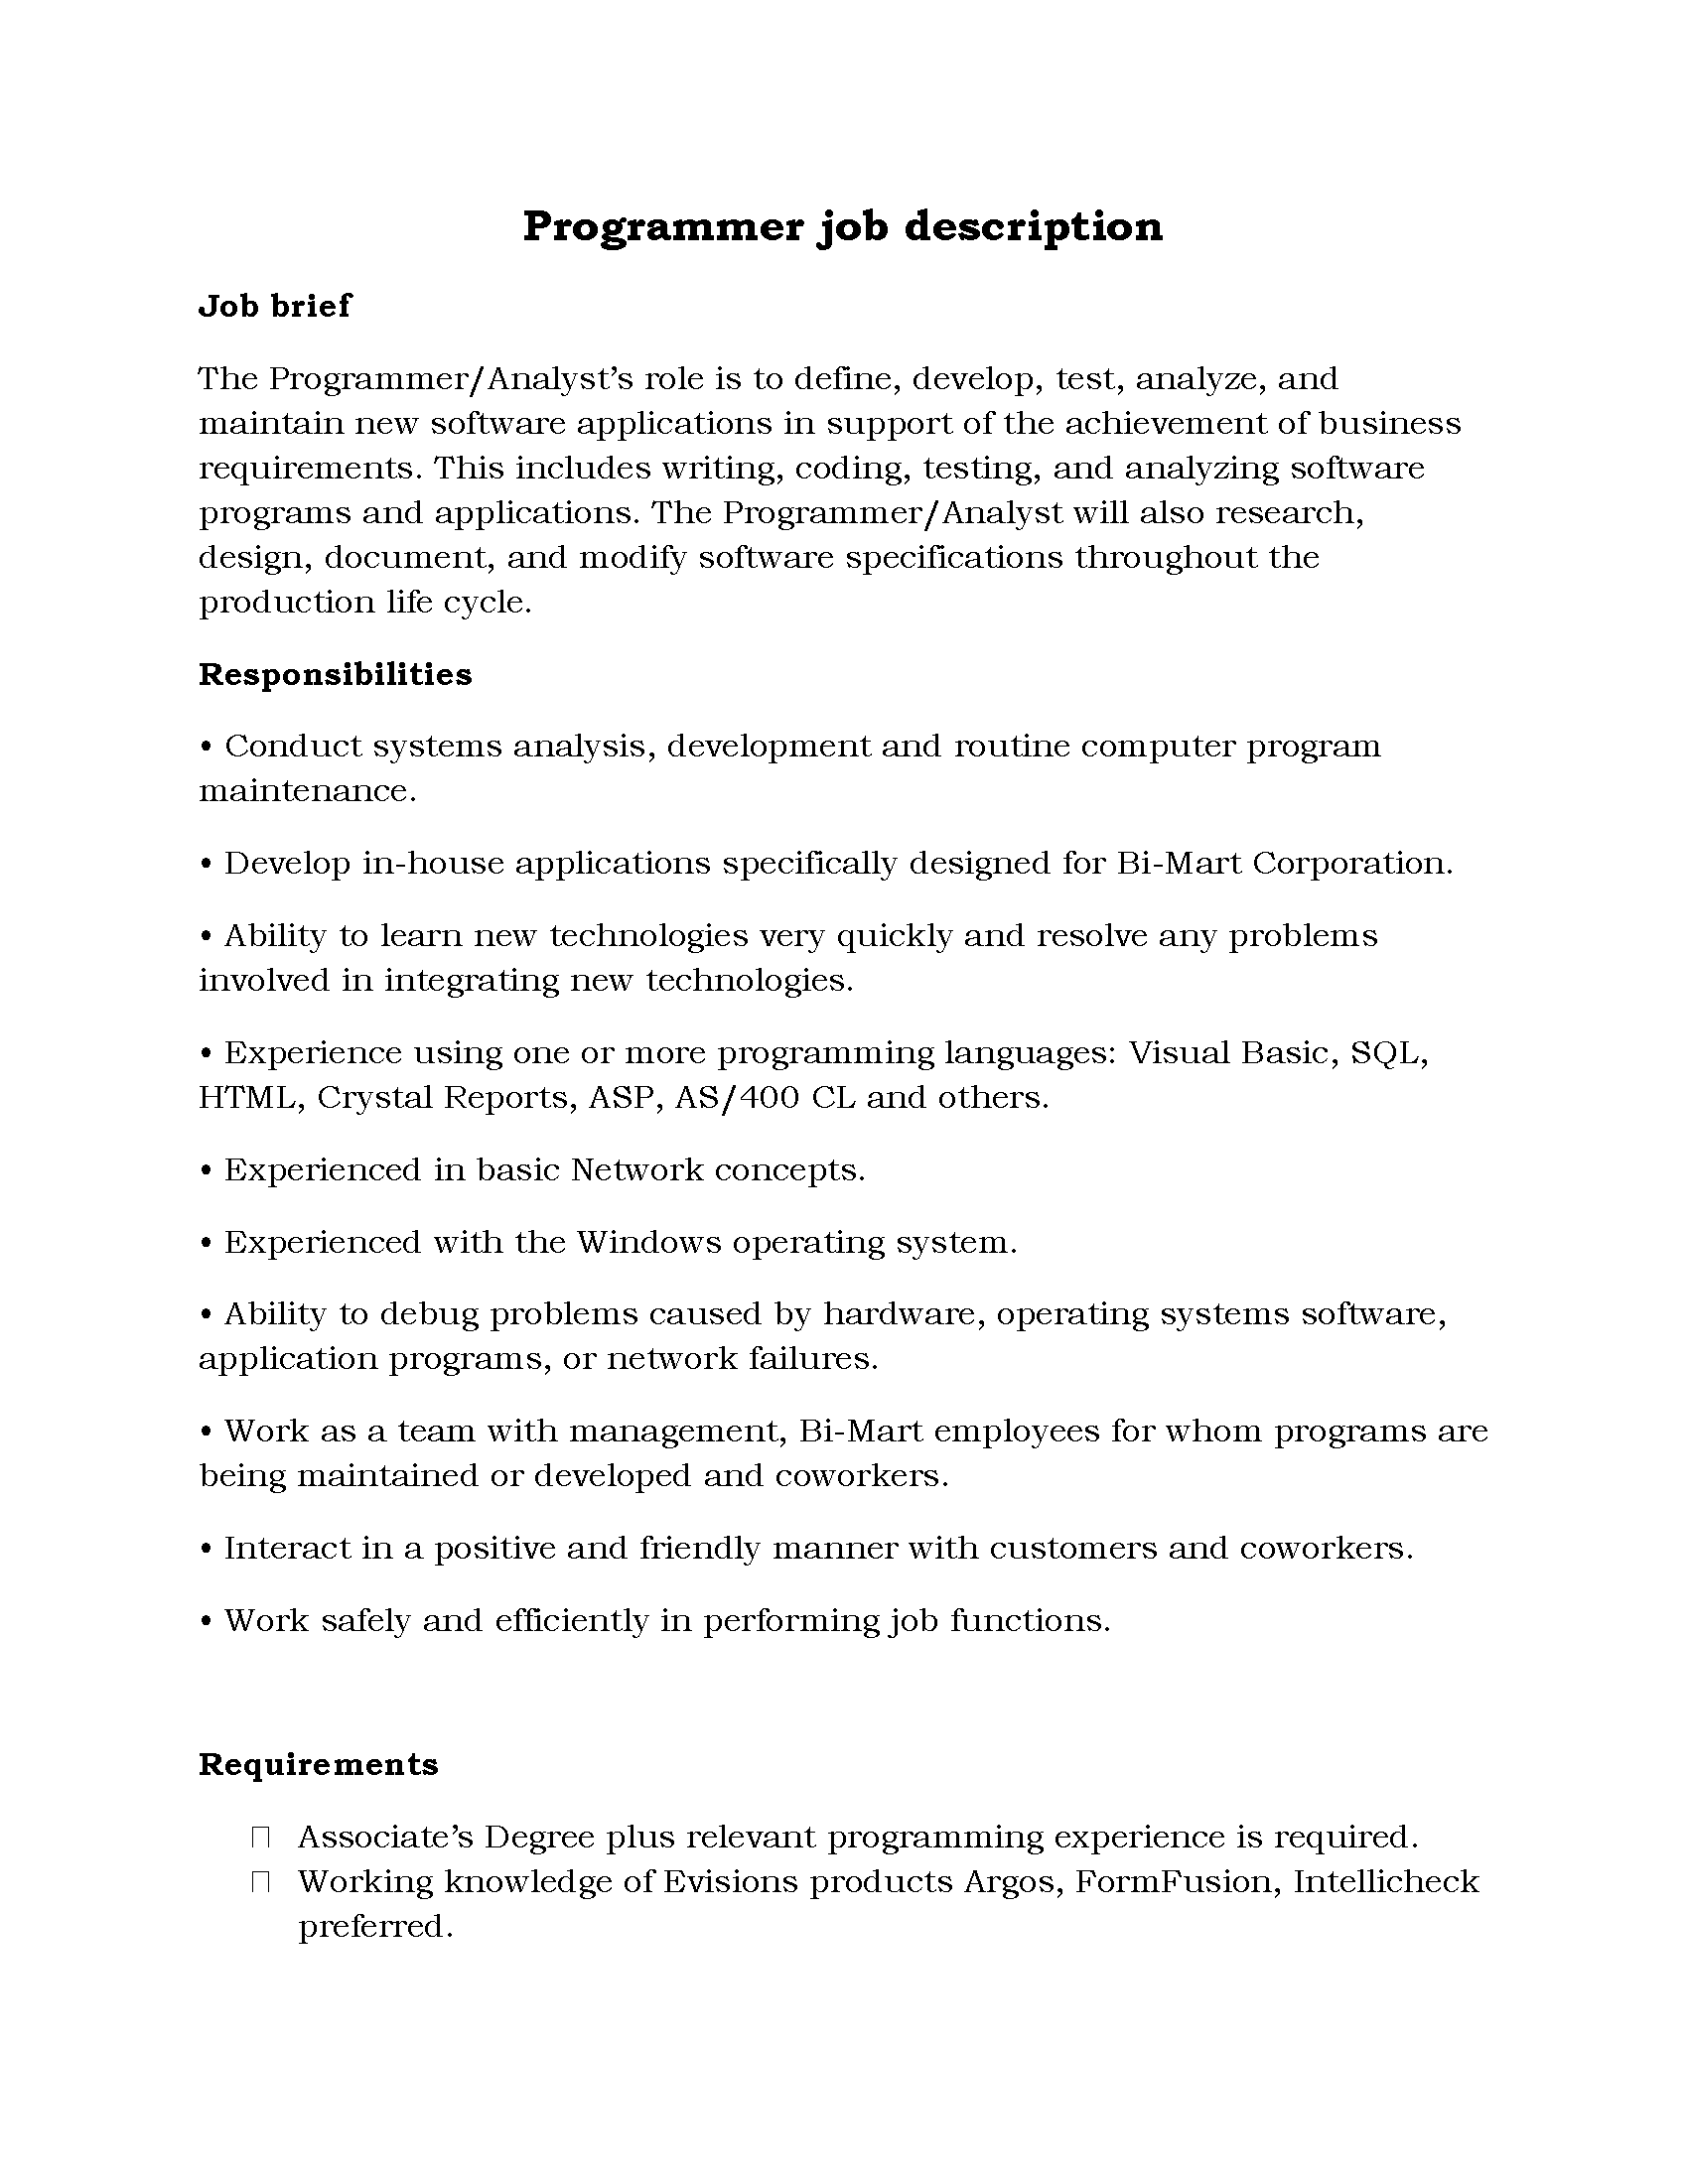 94-Programmer job description